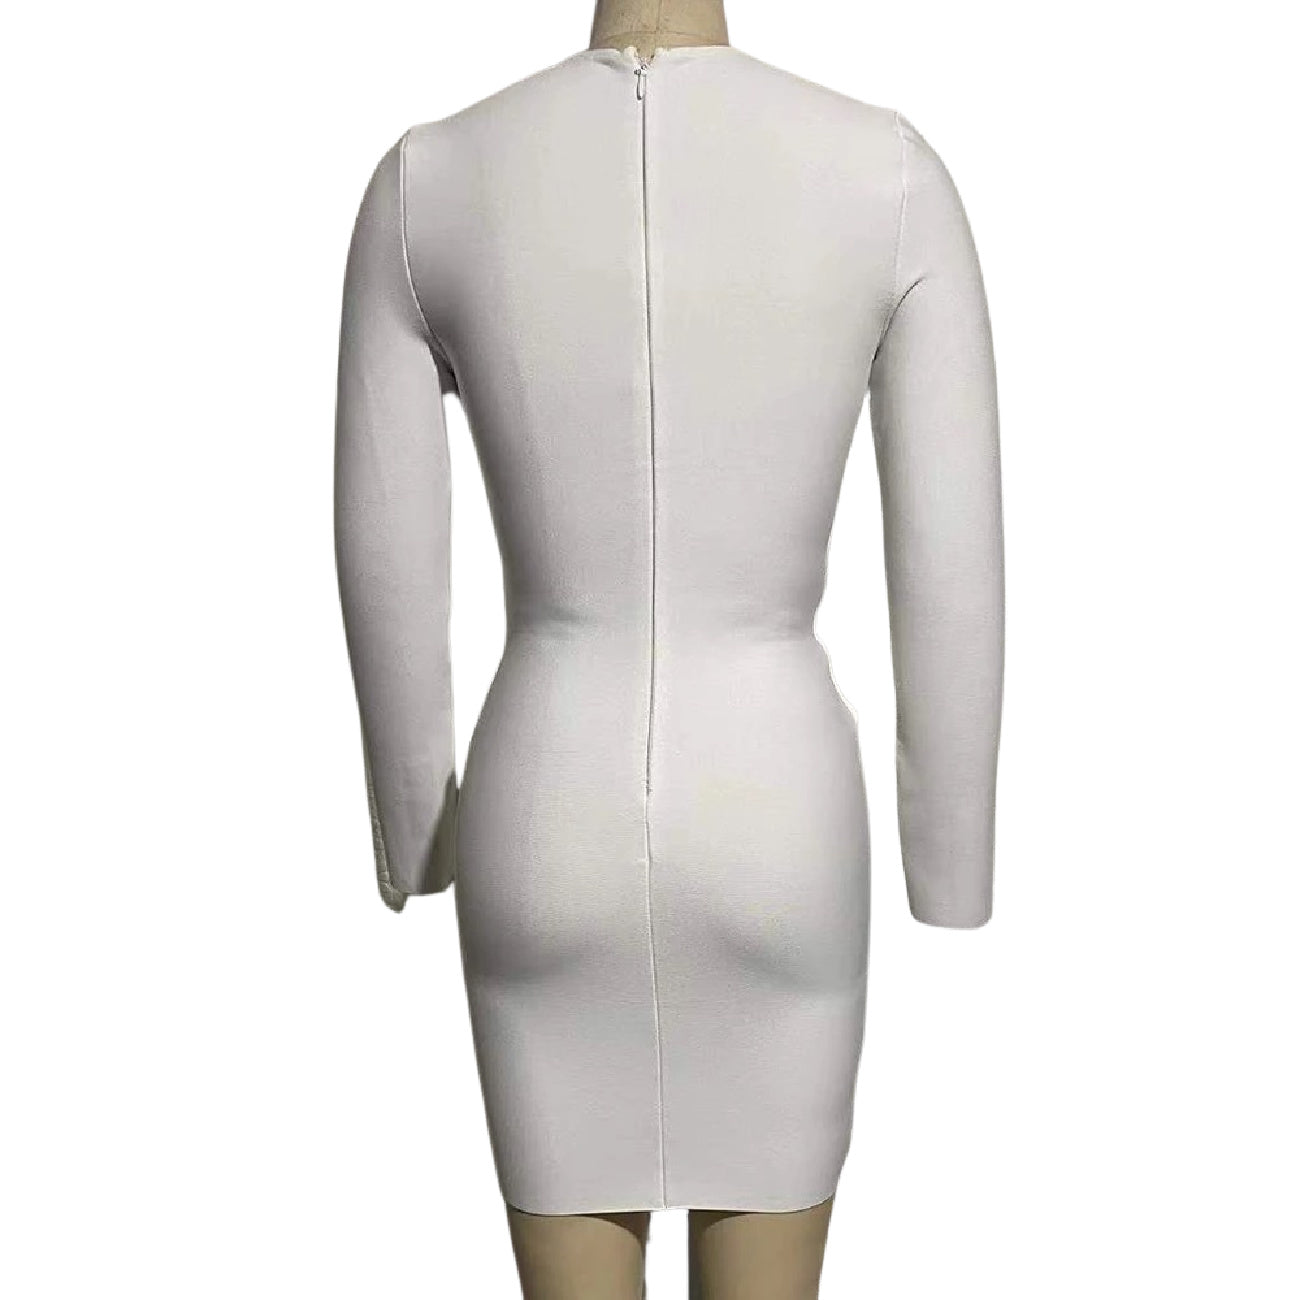 "Kazzie" Long Sleeve Cut out Bandage Dress - White - TOXIC ENVY BOUTIQUE 